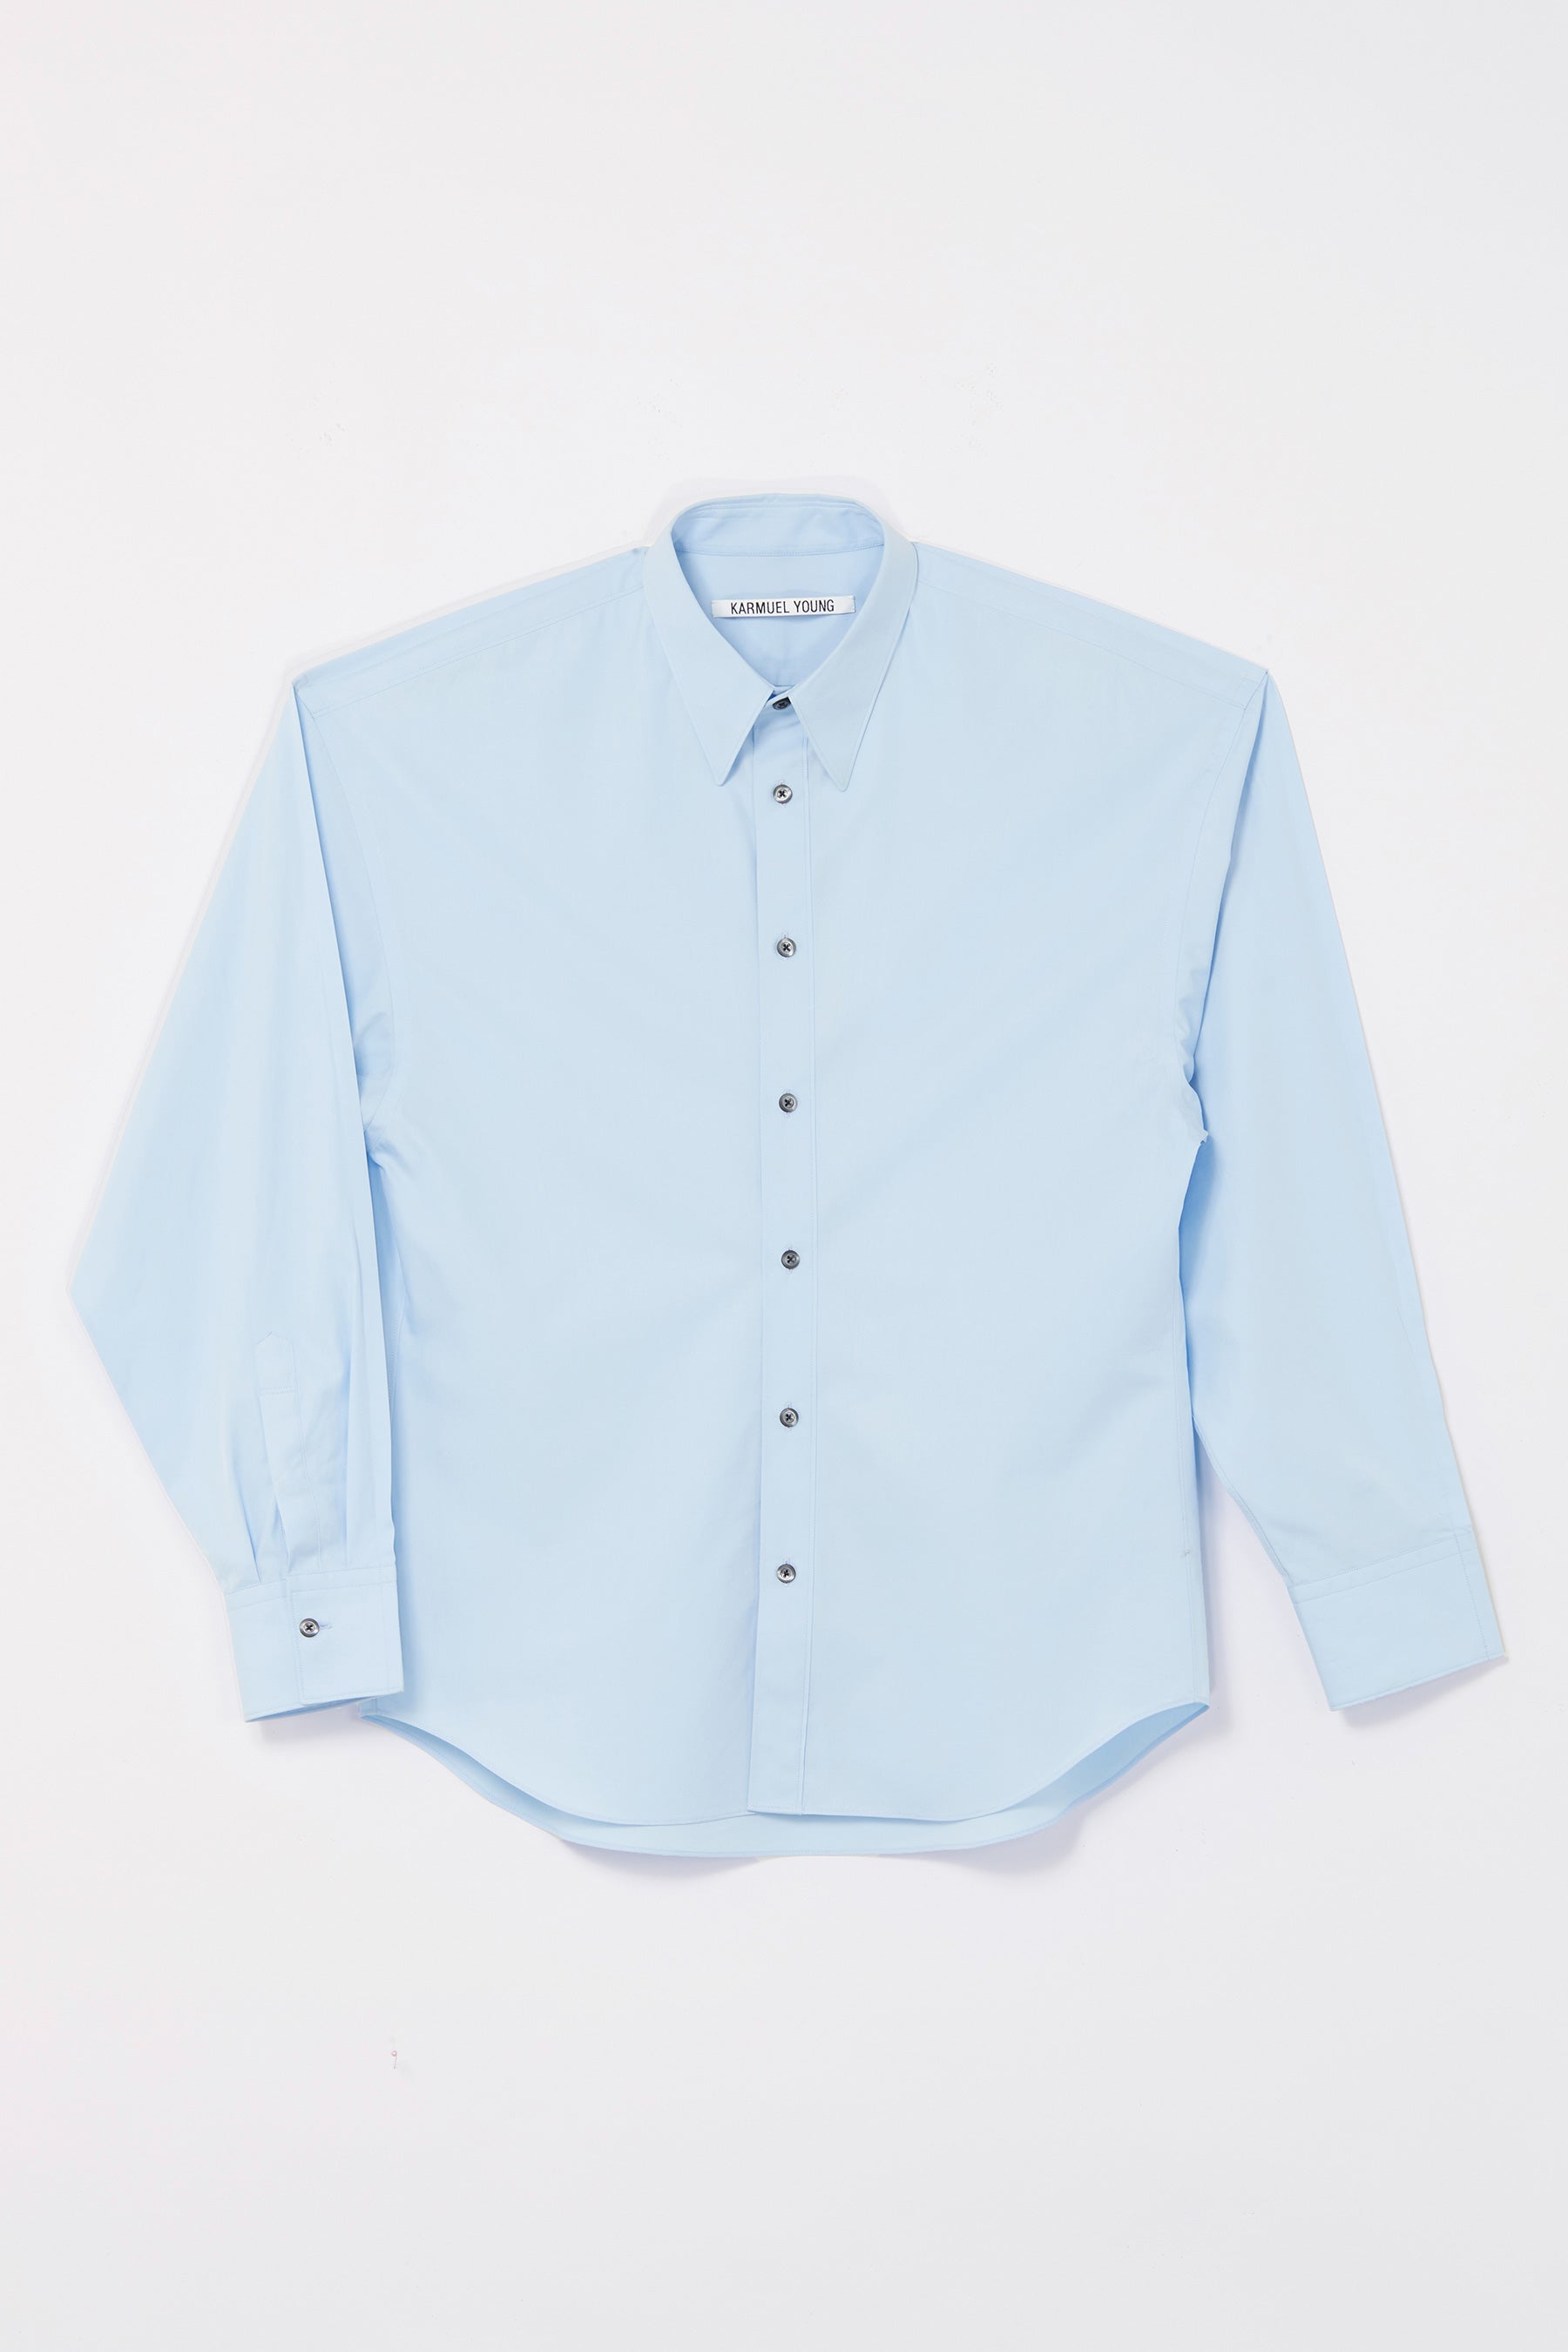 Light Blue Cotton Bold Trapezium XY-plane Shirt